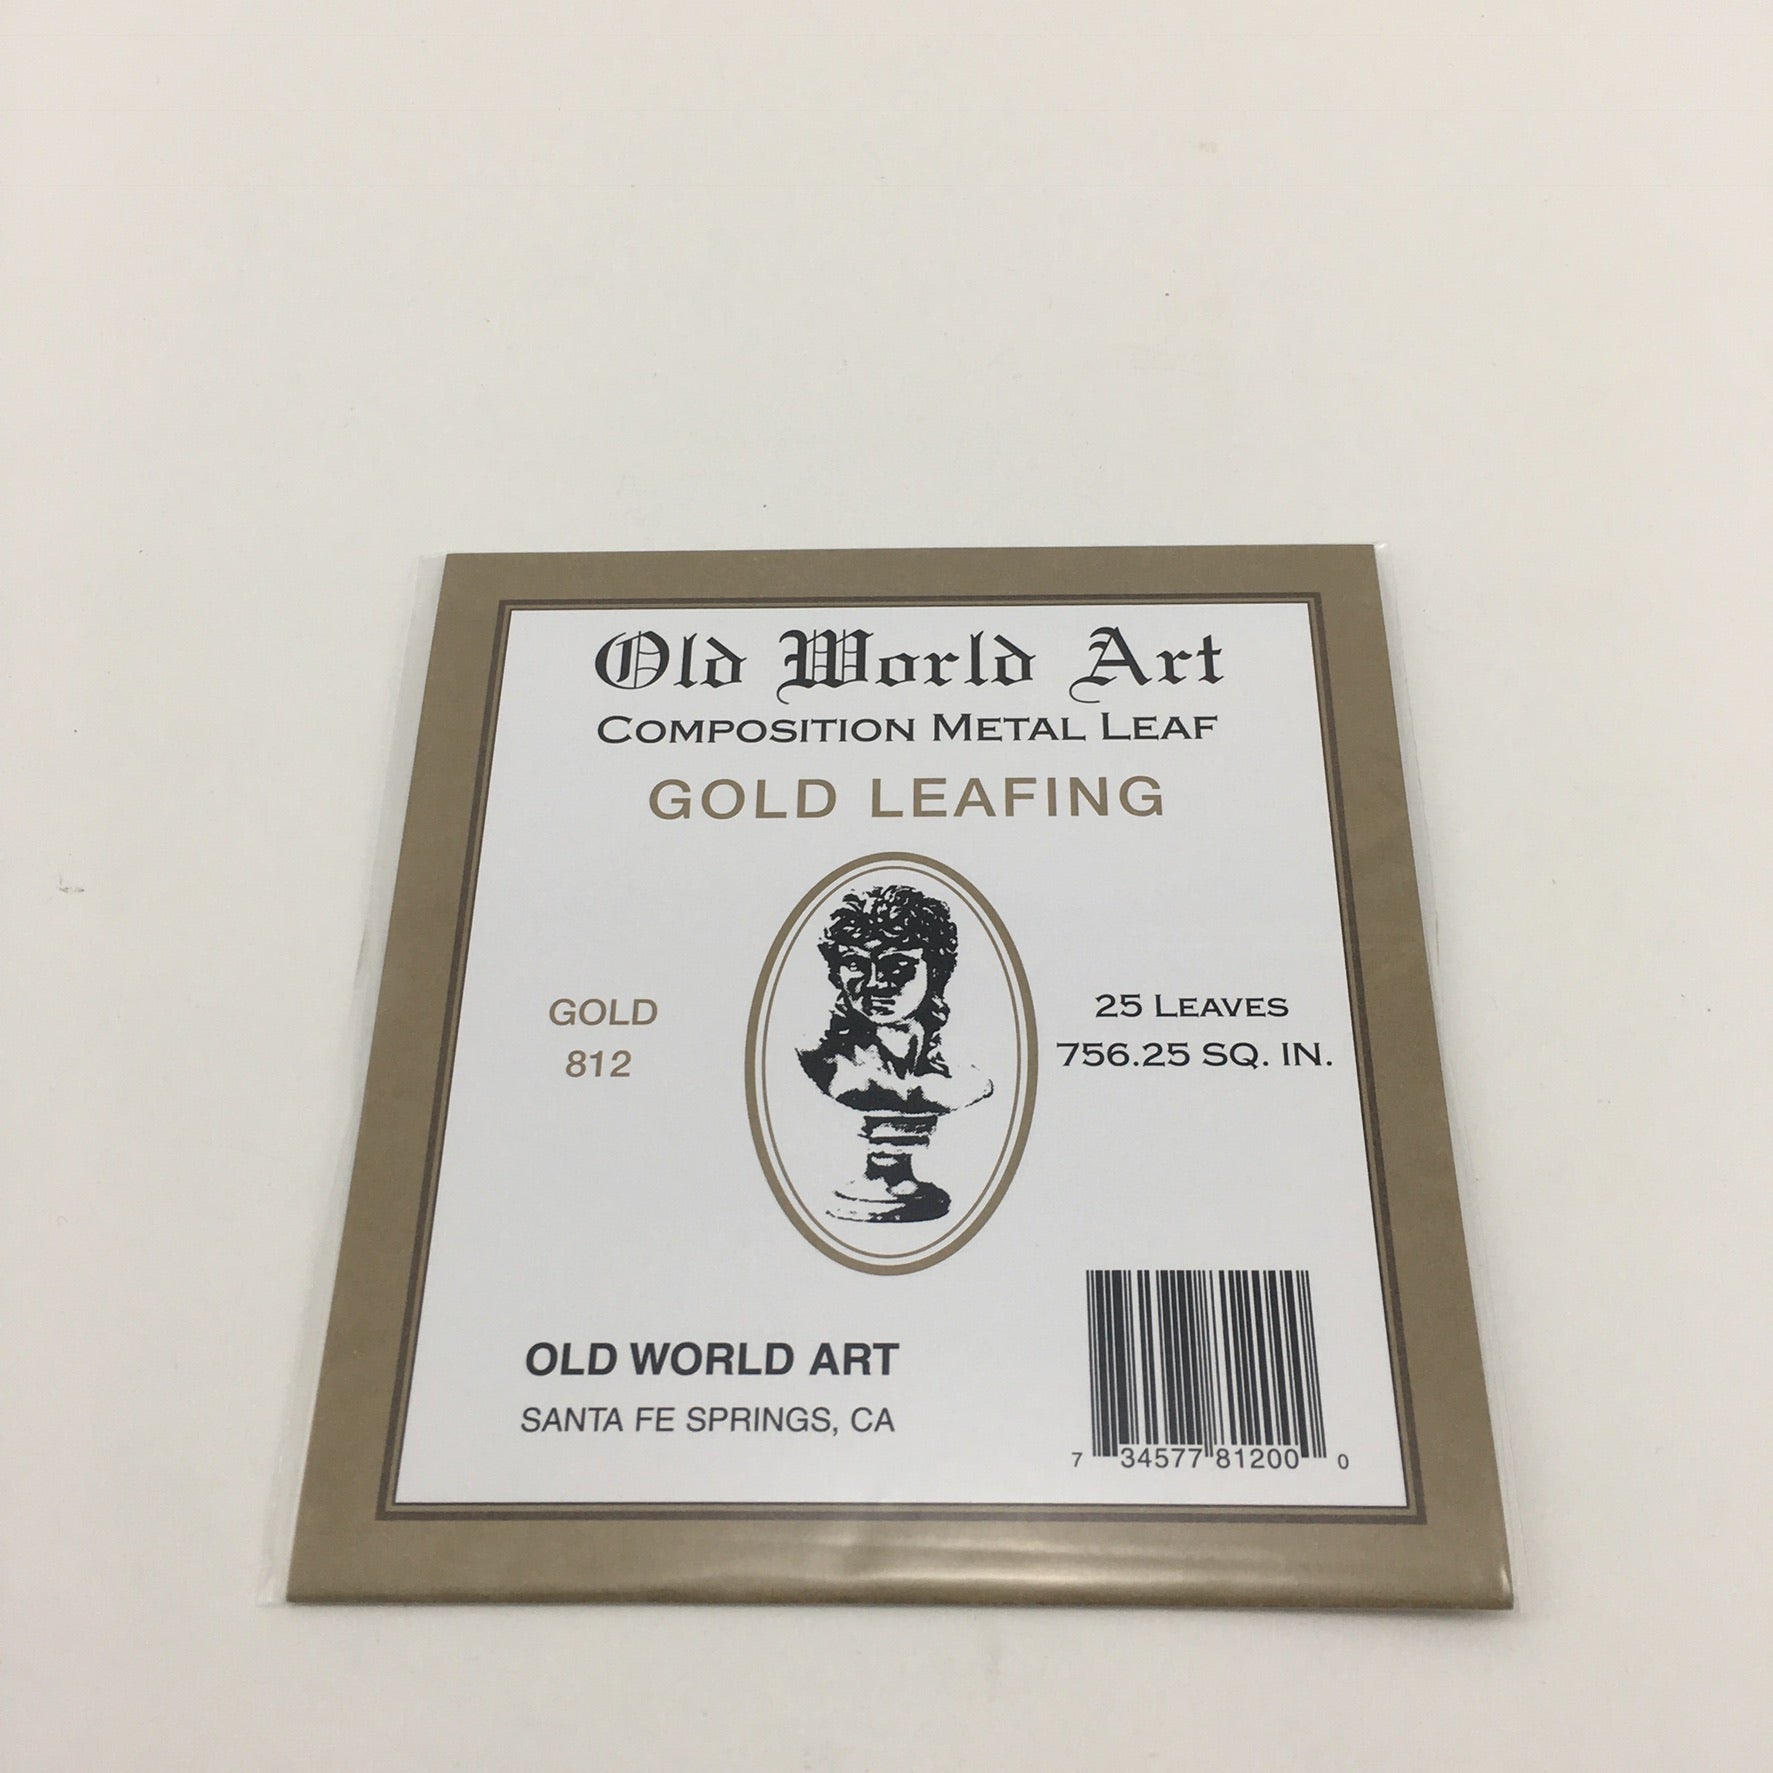 Old World Art Composition Metal Leaf - 25 Leaves / 756.25 SQ. IN. - Gold by Old World Art - K. A. Artist Shop